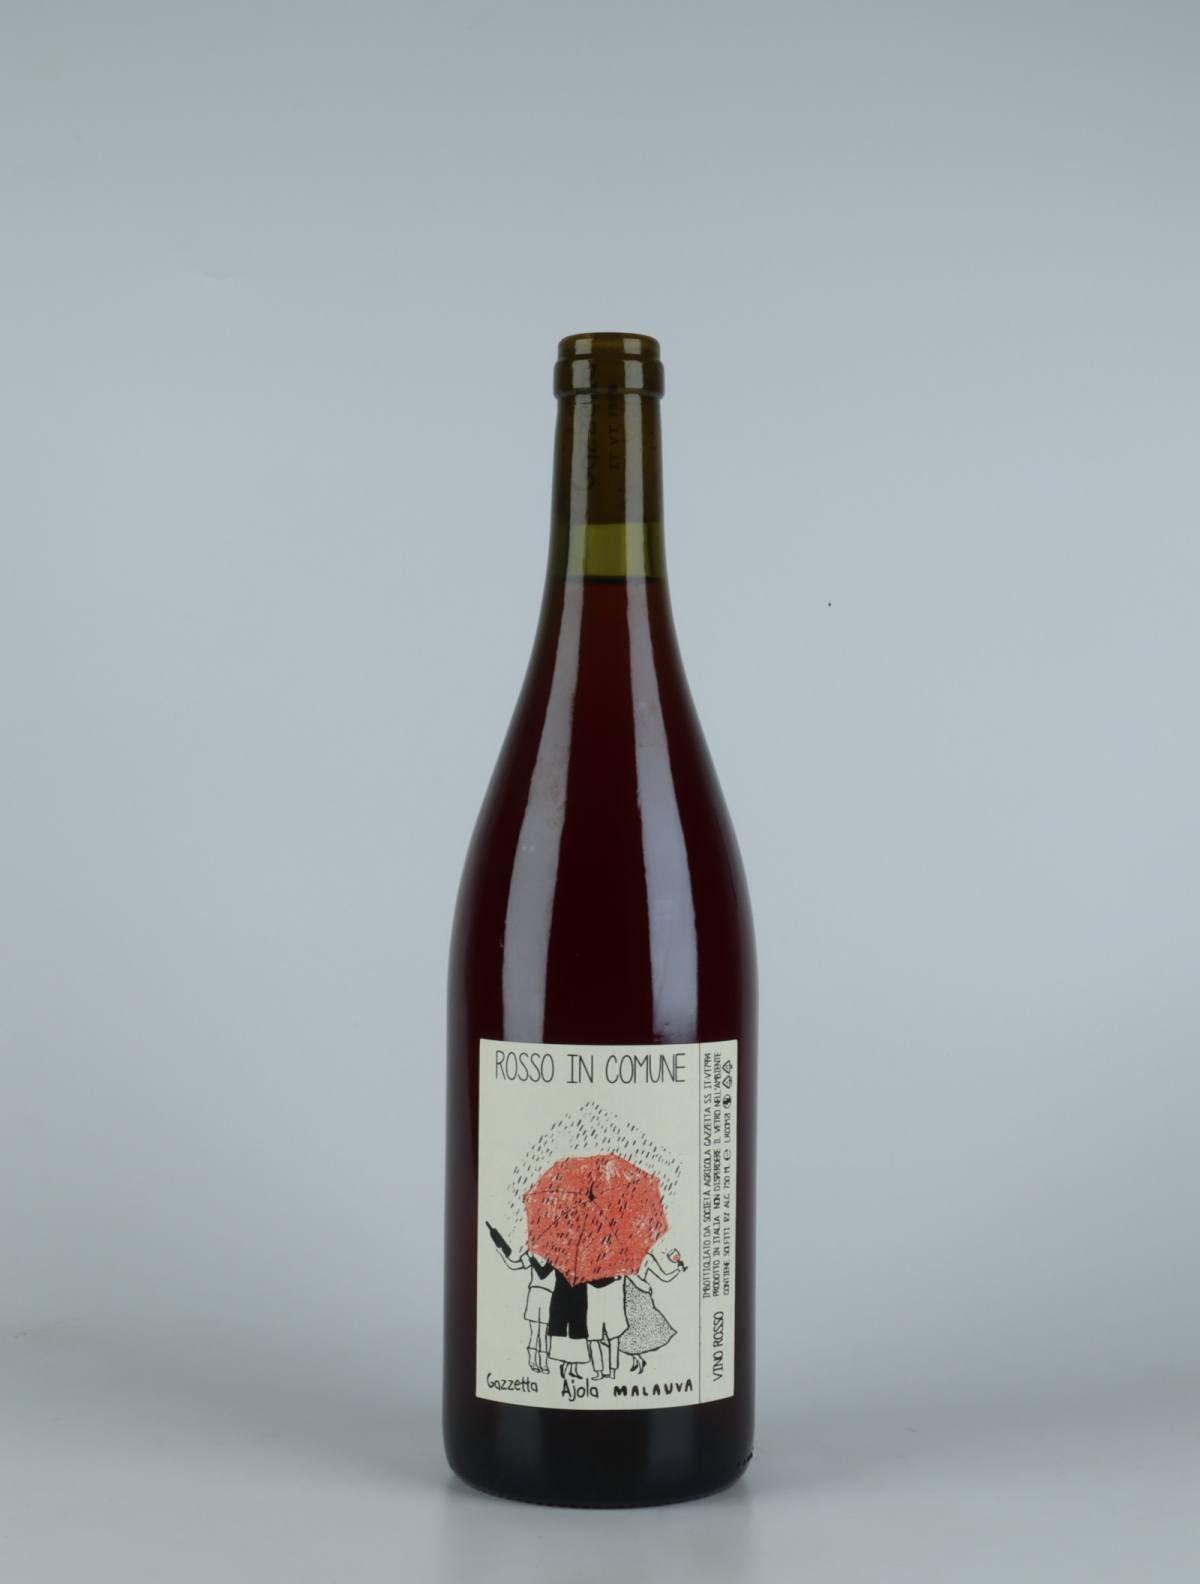 A bottle 2021 Rosso in Commune Red wine from Gazzetta, Lazio in Italy